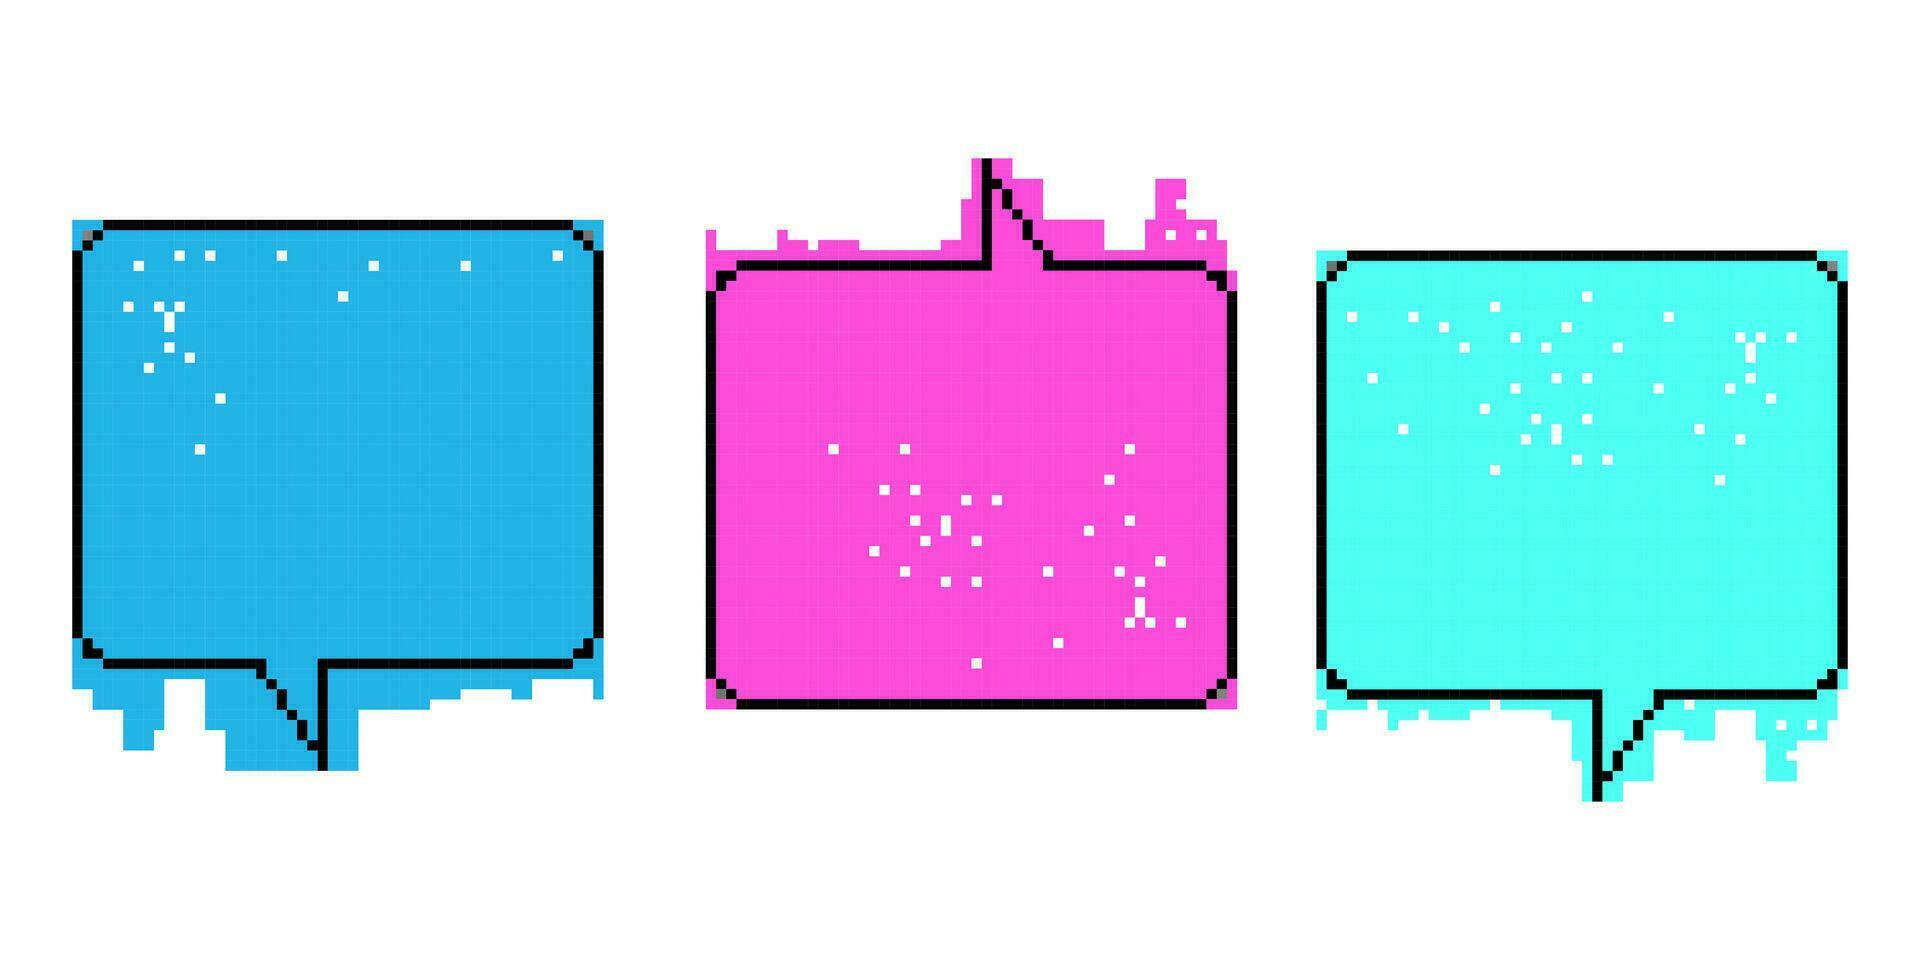 píxel color habla burbuja. geométrico texto pixelado diálogo cajas muerto píxeles vector